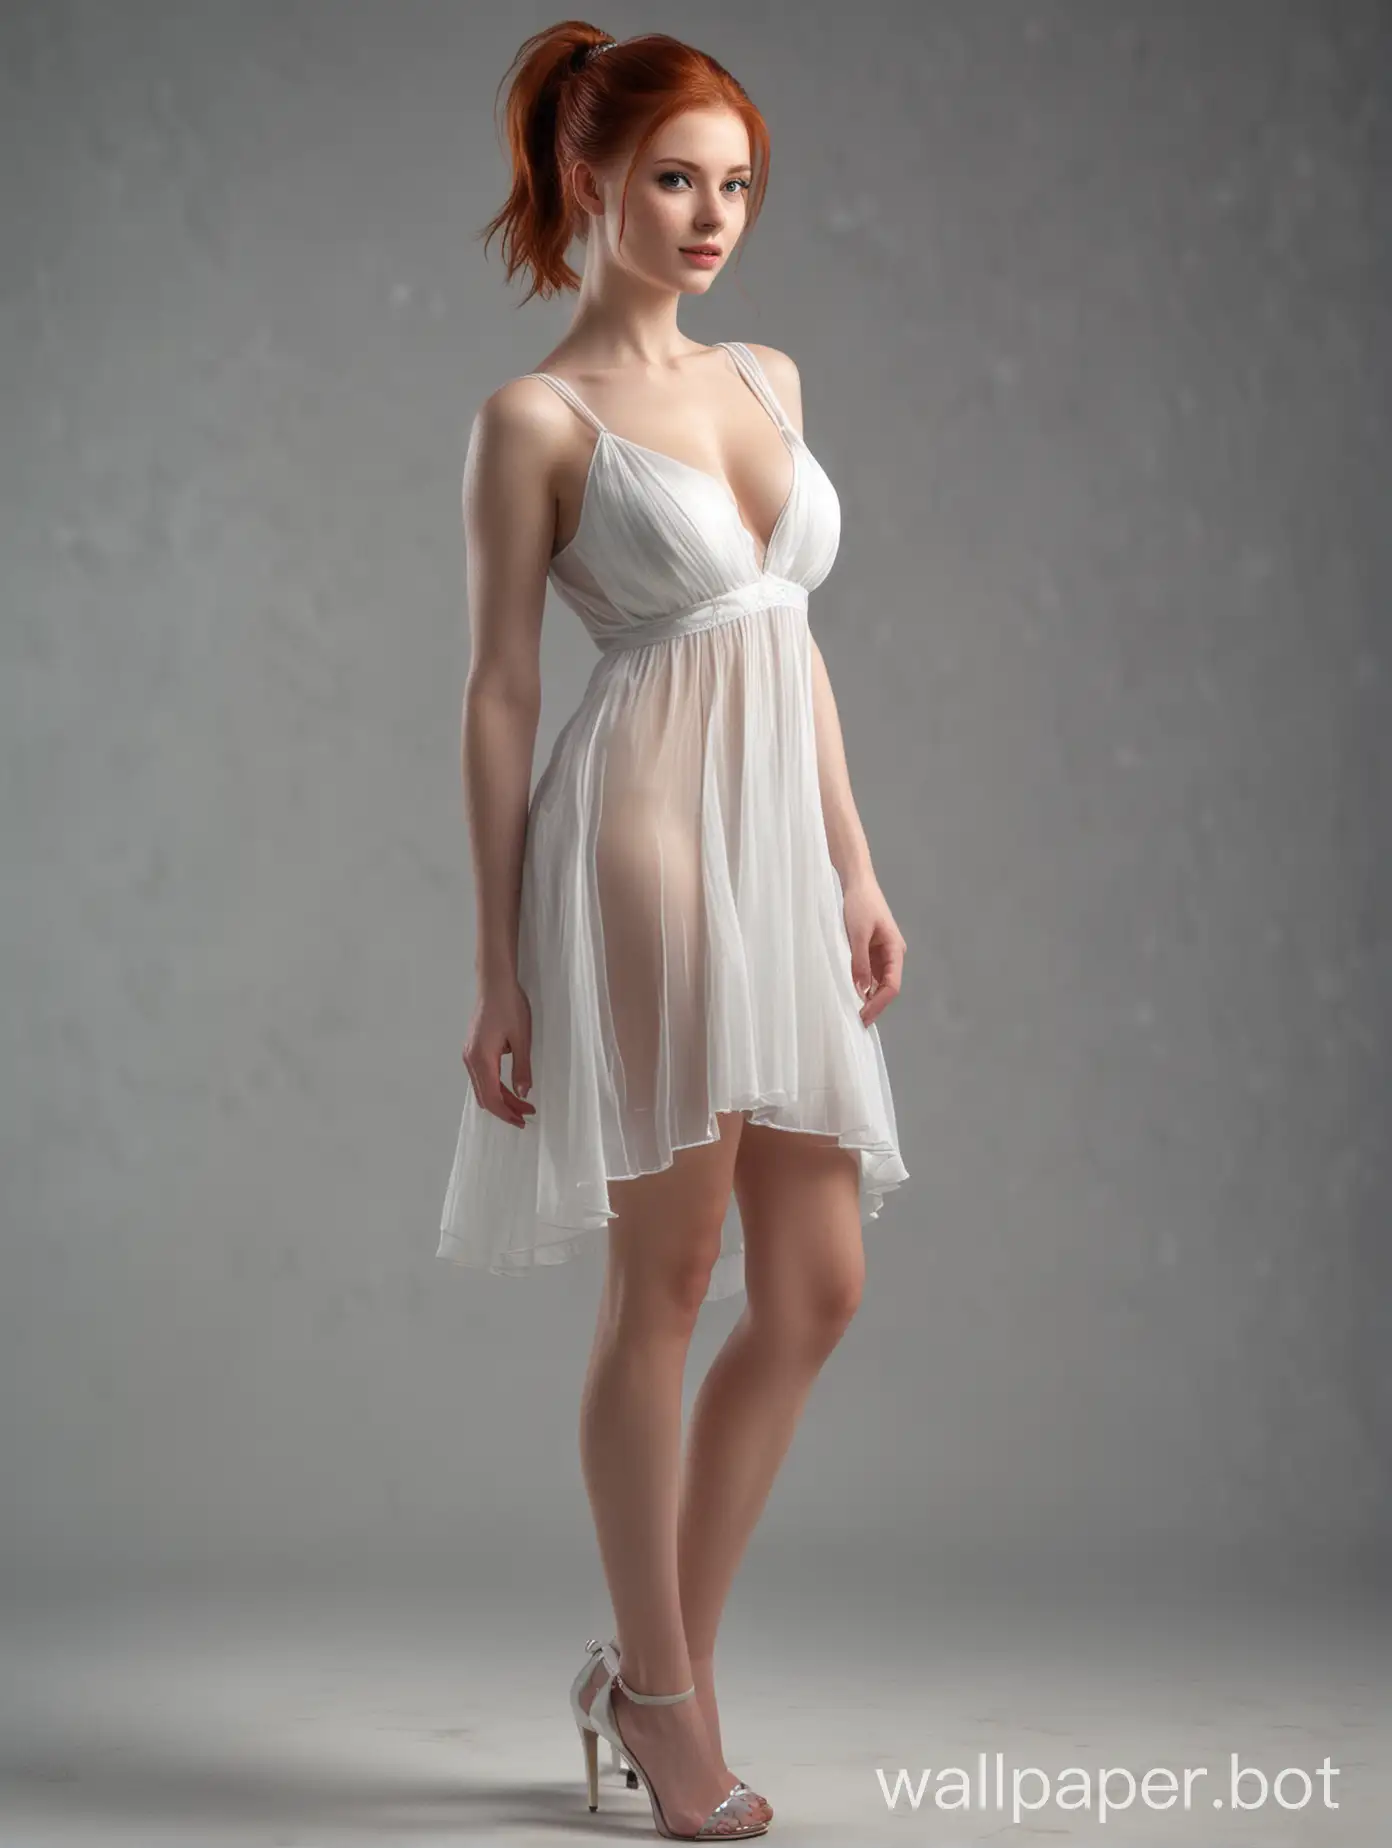 redhead female model, looks cute, very thin white sheer dress. 15cm heels, standing, big breast, ponytail hair, ultra detail, soft hdr